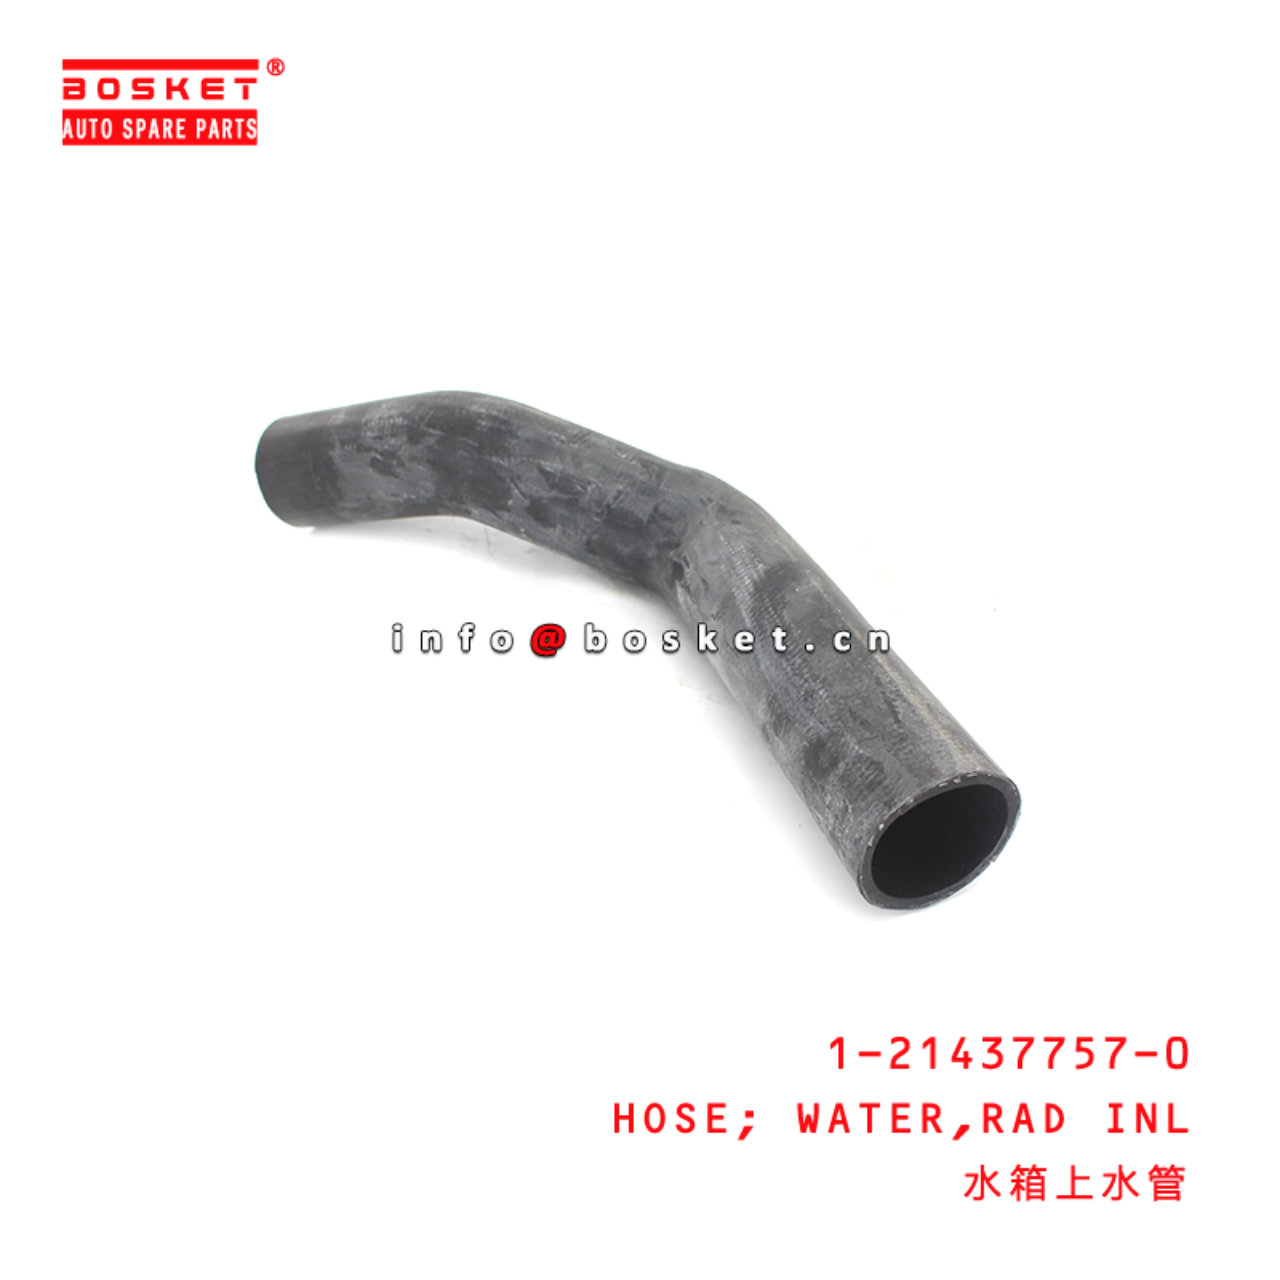 1-21437757-0 Radiator Inlet Water Hose Suitable for ISUZU FVR34 6HK1 1214377570